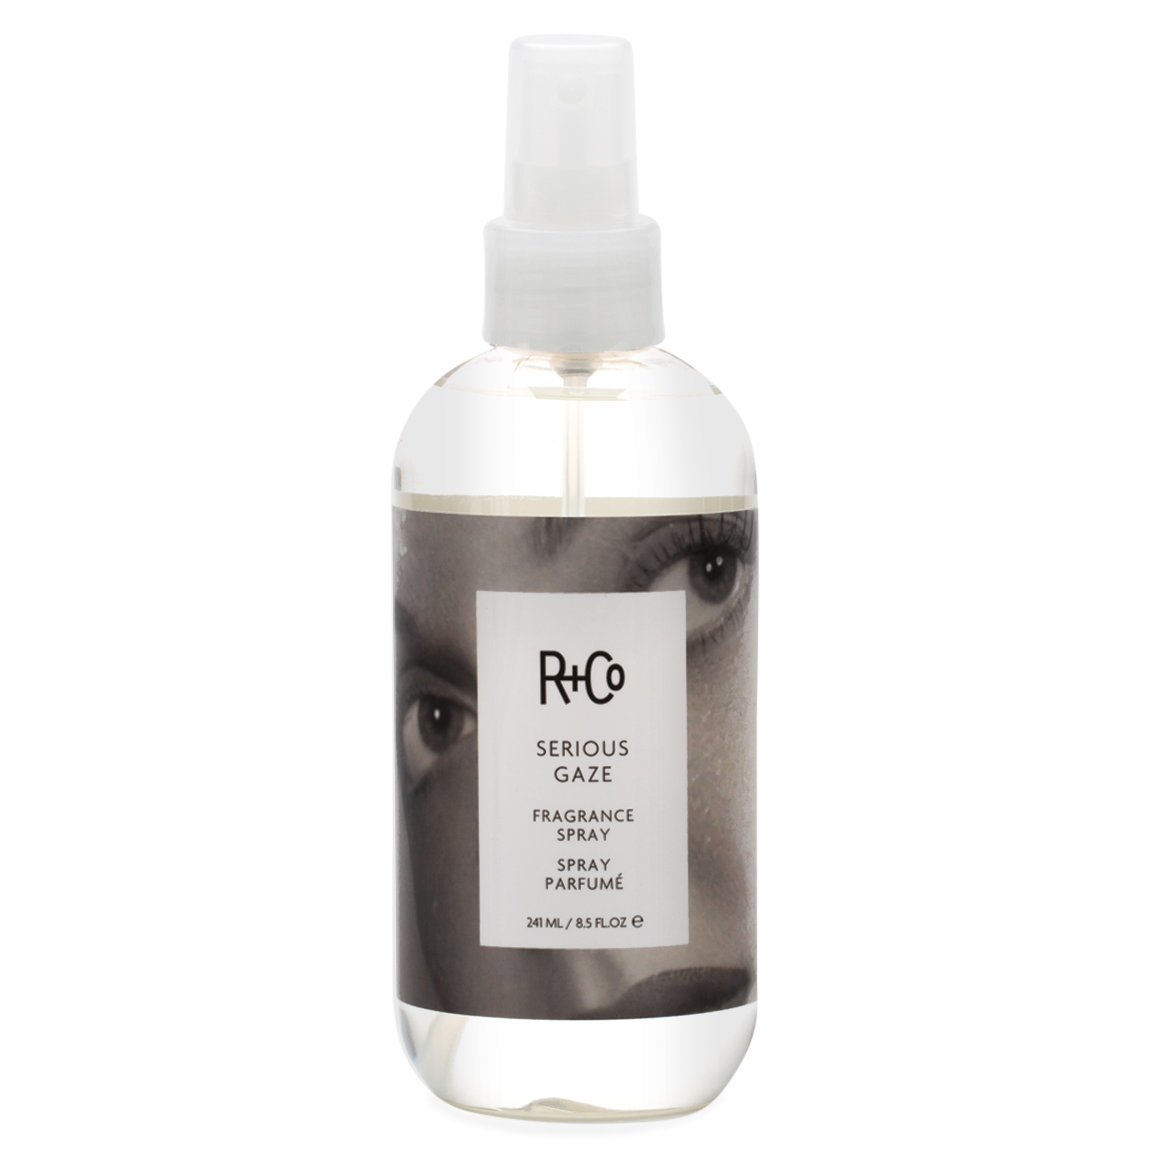 R+Co Serious Gaze Fragrance Spray alternative view 1 - product swatch.